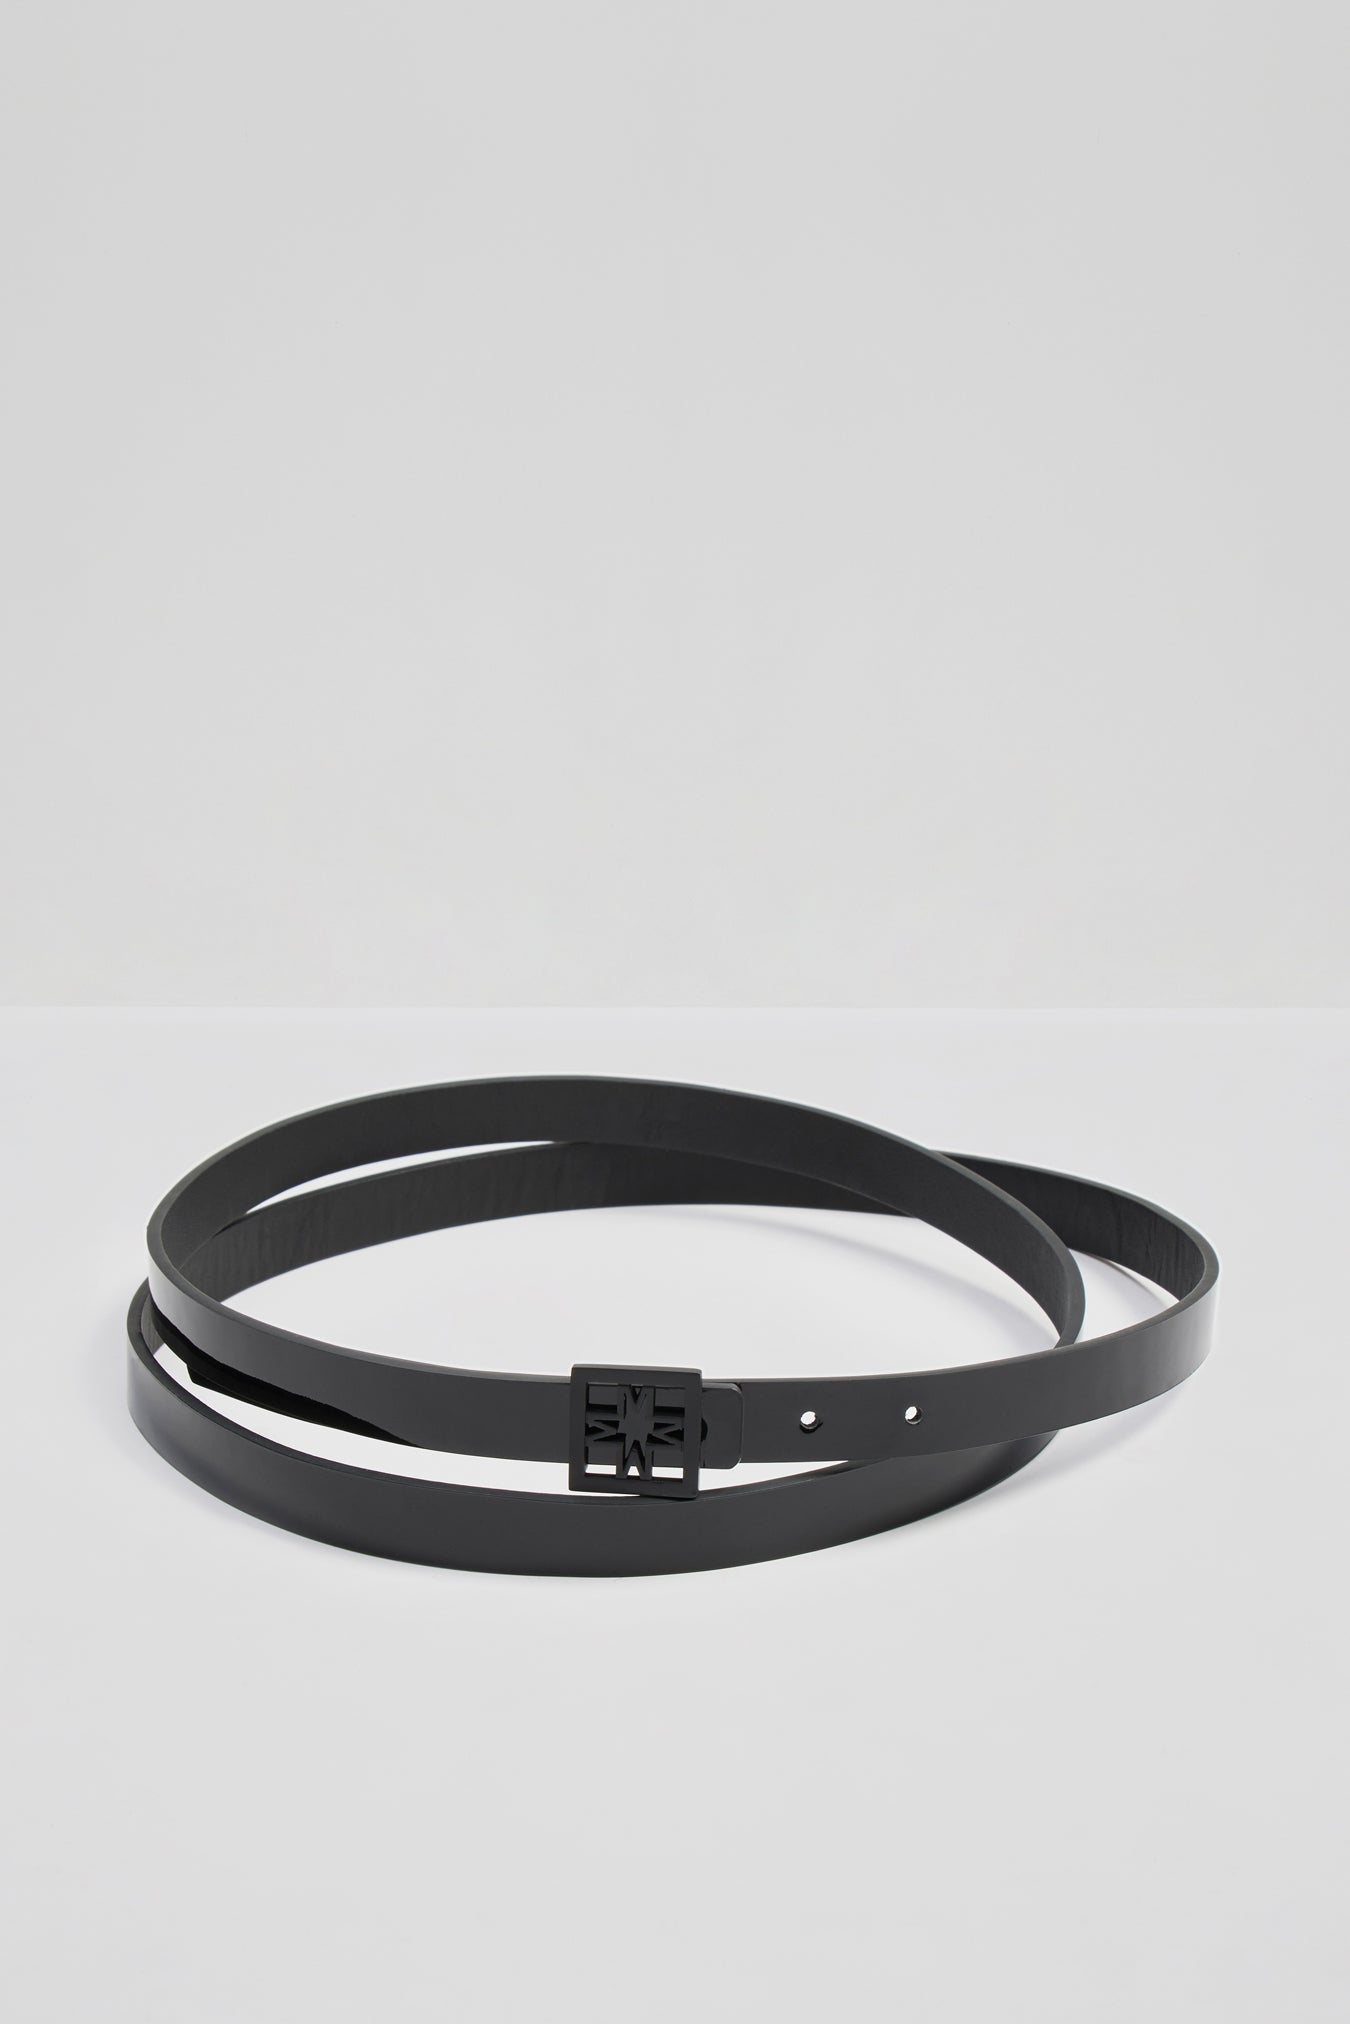 Hazel Double Length Patent Iconic Leather Belt Black